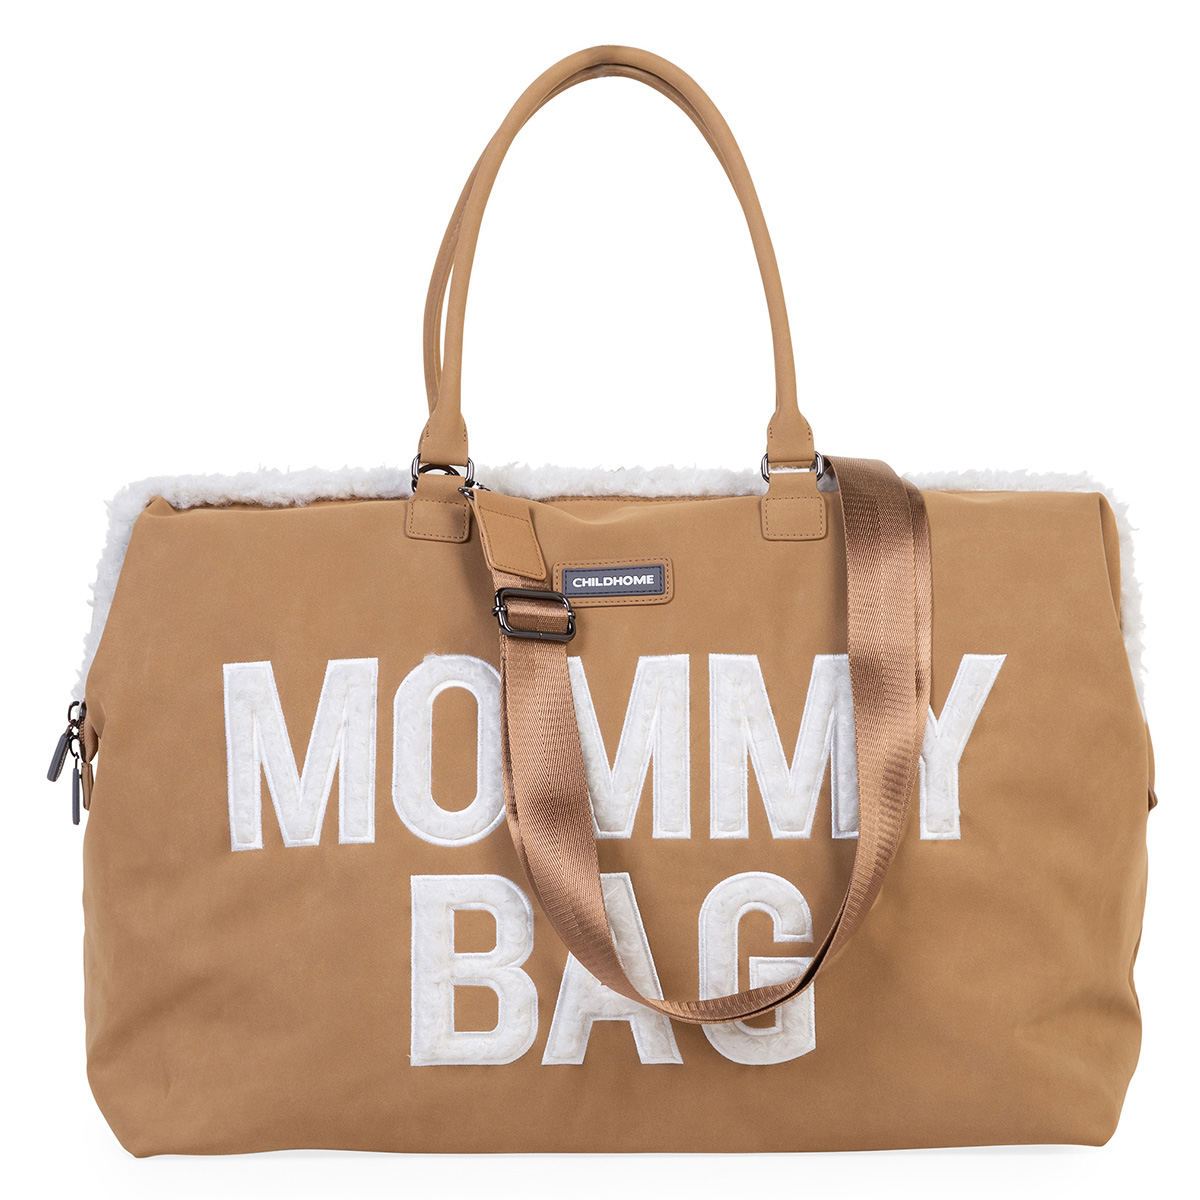 Childhome Mommy Bag Large - Daim - Sac à langer Childhome sur L